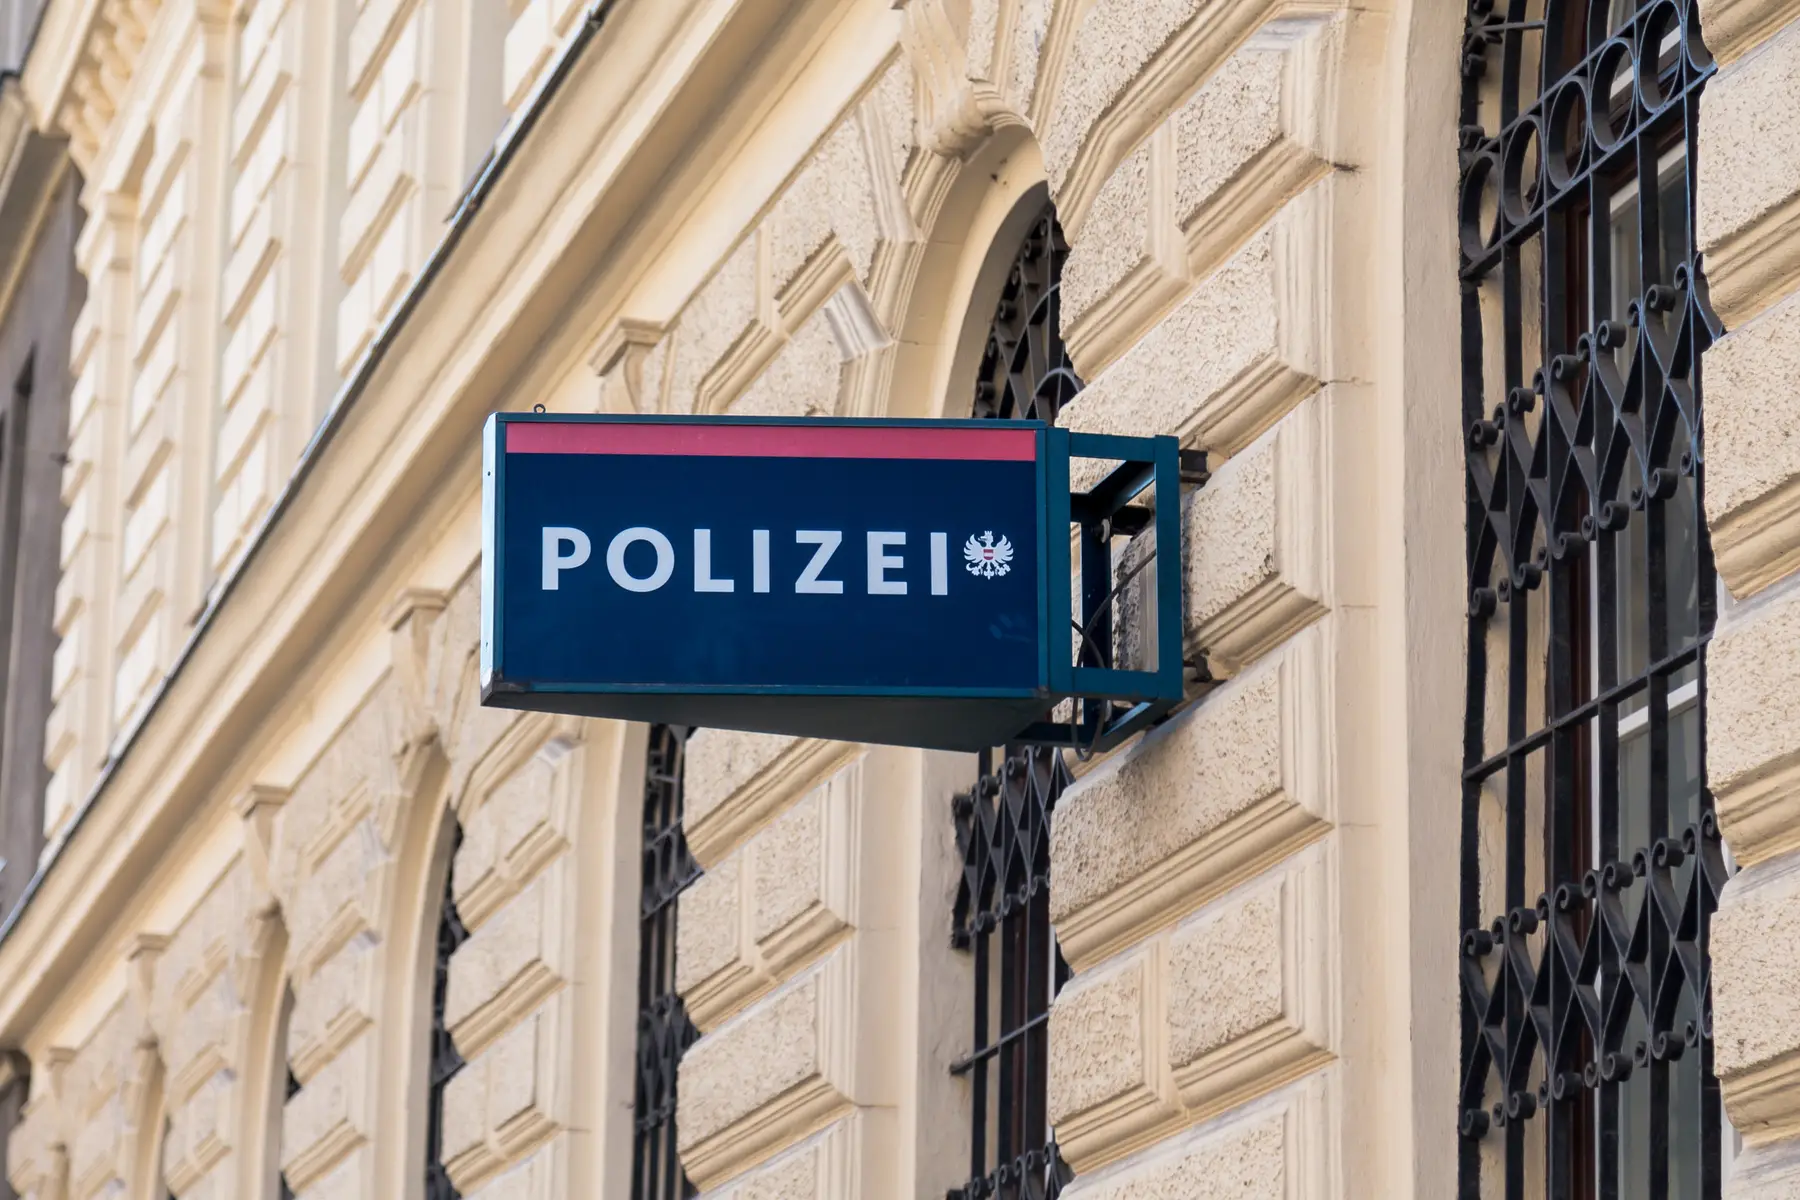 Polizei Austria